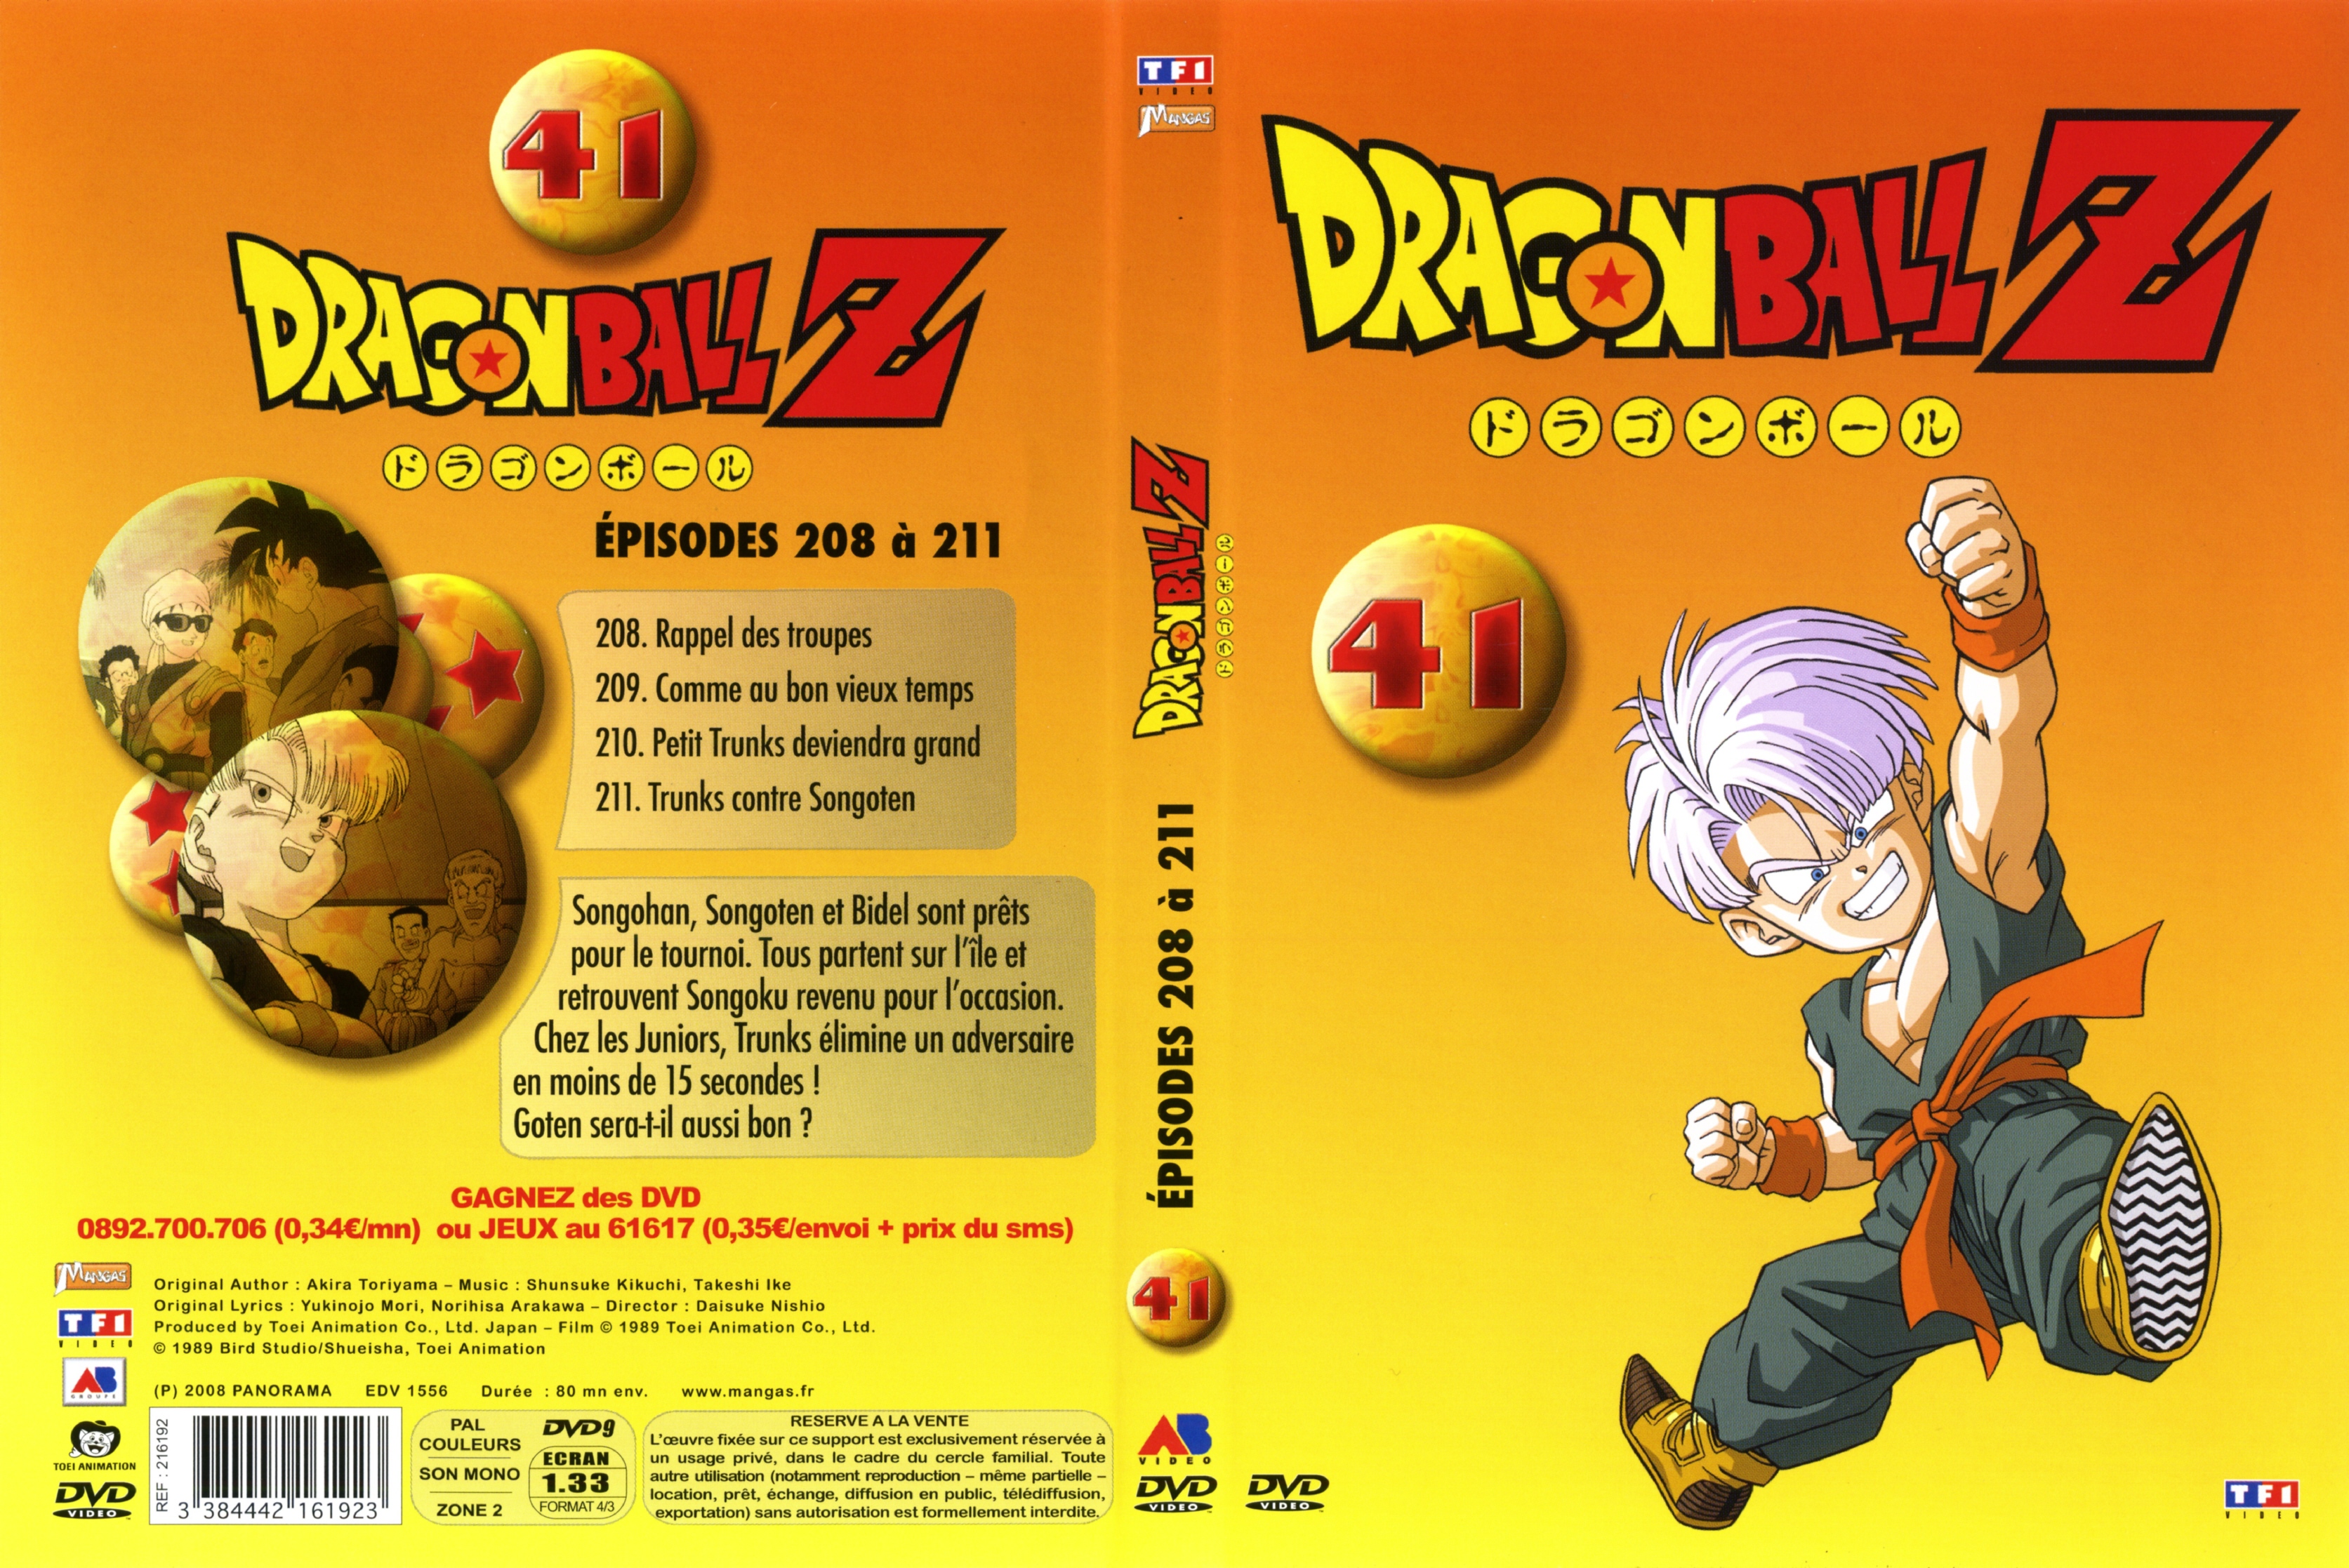 Jaquette DVD Dragon ball Z vol 41